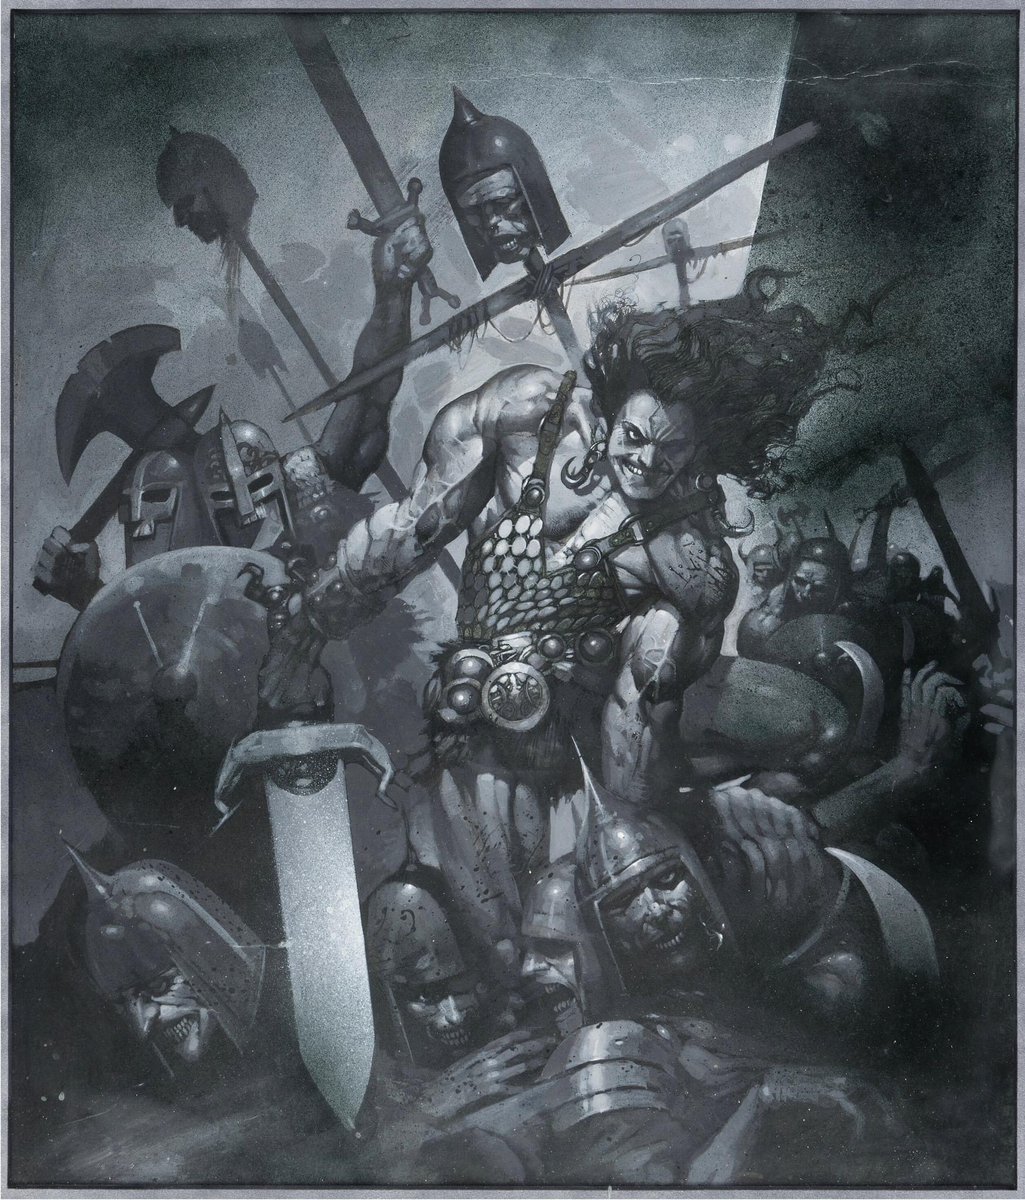 Kyrn the barbarian. A1 comics (1989)